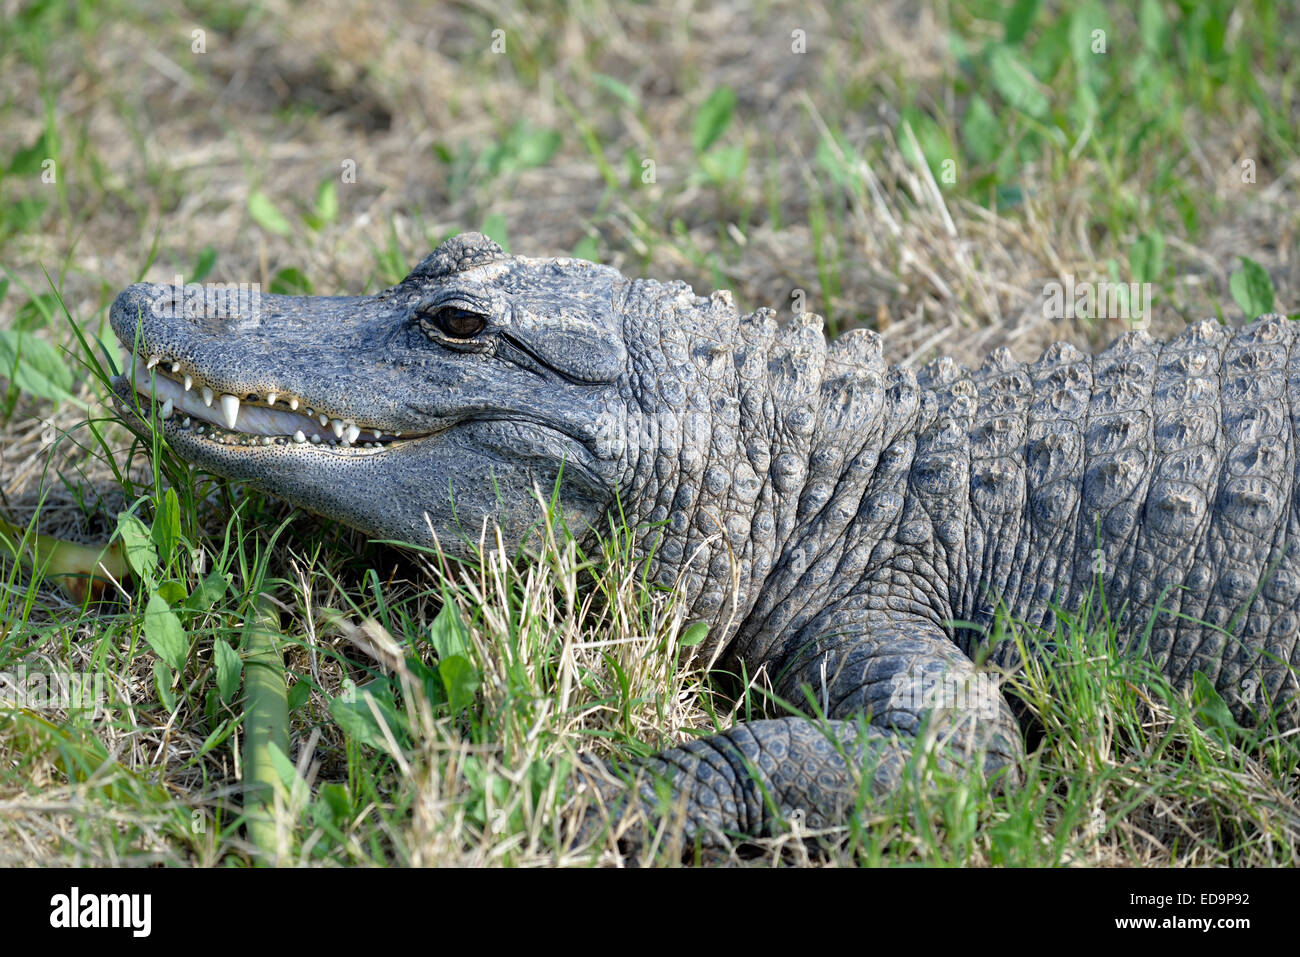 Amerikanischer Alligator Stockfoto